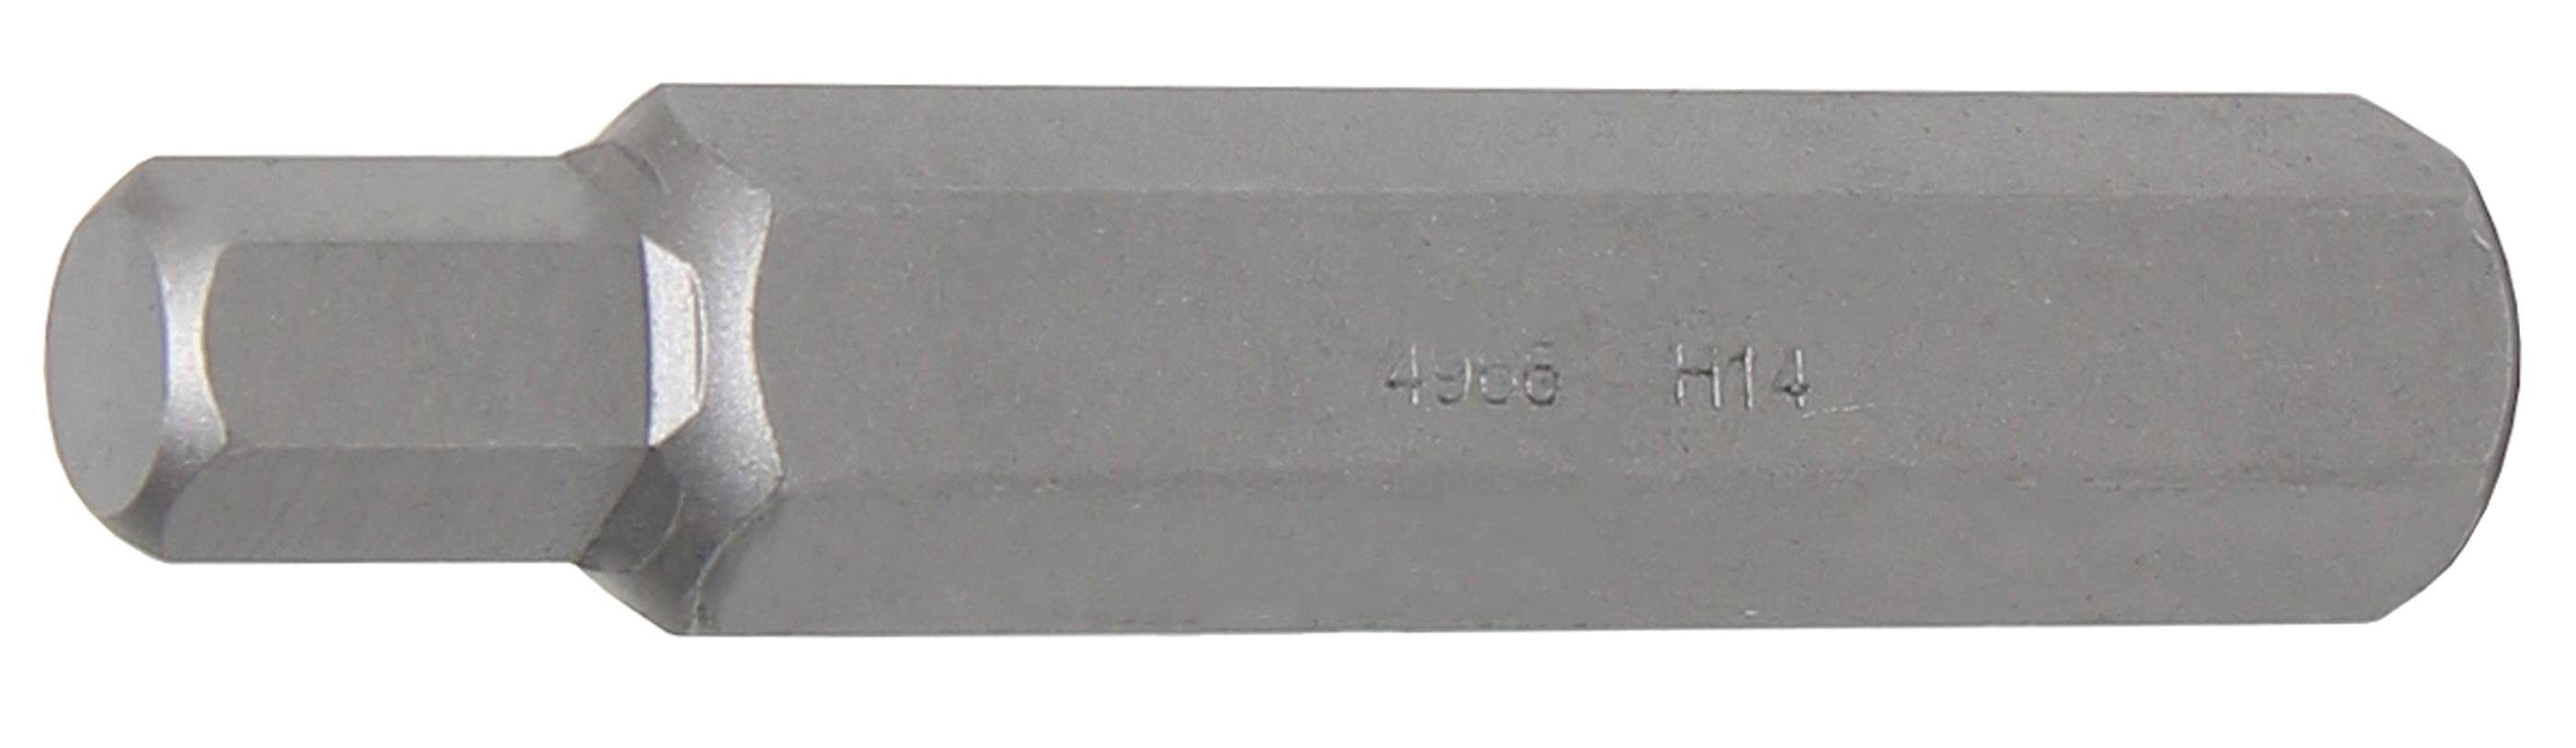 BGS technic Sechskant-Bit Bit, Länge 75 mm, Antrieb Außensechskant 10 mm (3/8), Innensechskant 14 mm